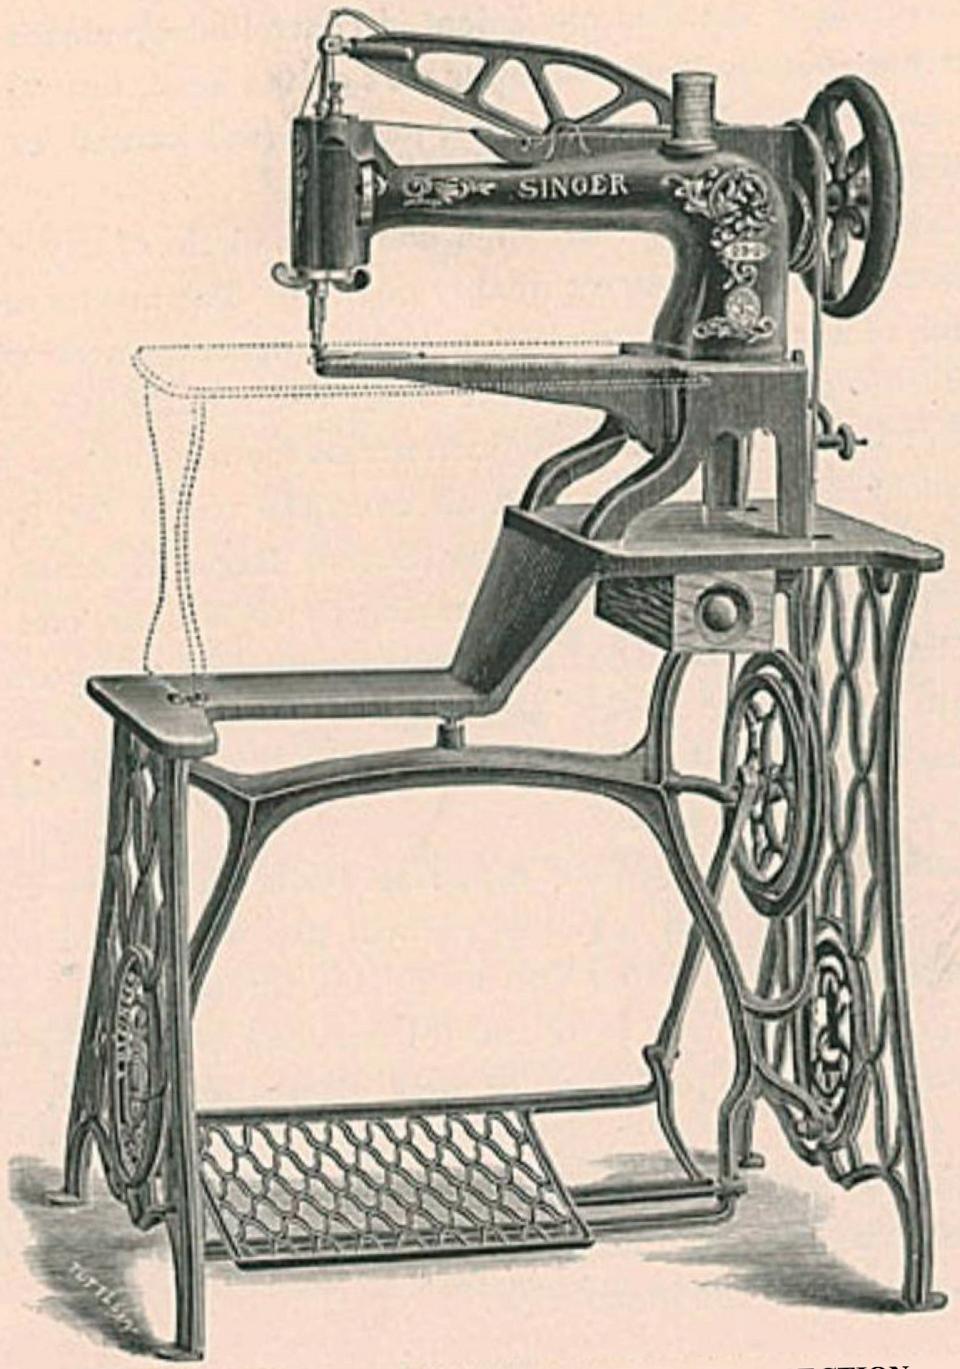 Singer Model 29-2 Sewing Machine